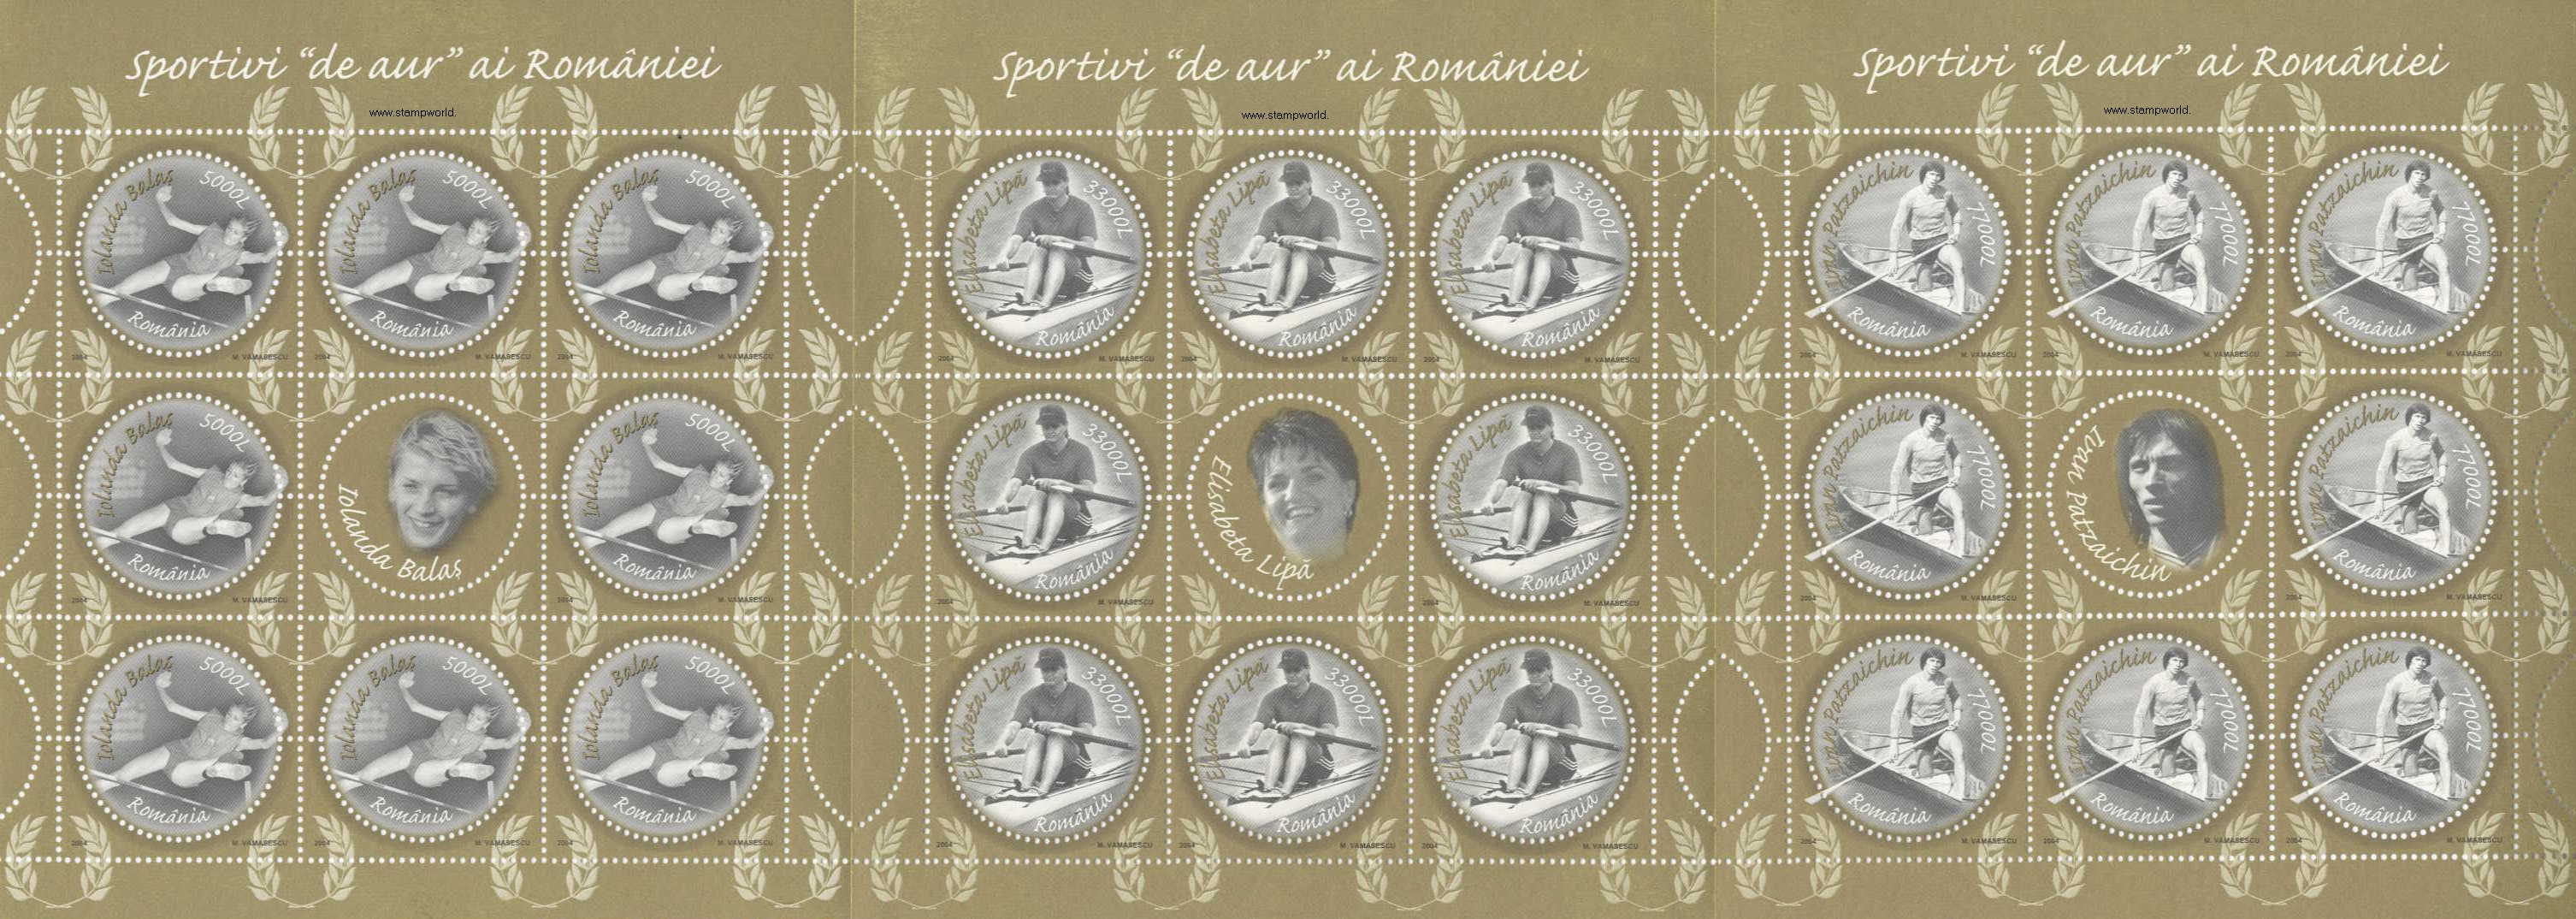 File:Gabriela Szabo 2000 Romania stamp.jpg - Wikimedia Commons